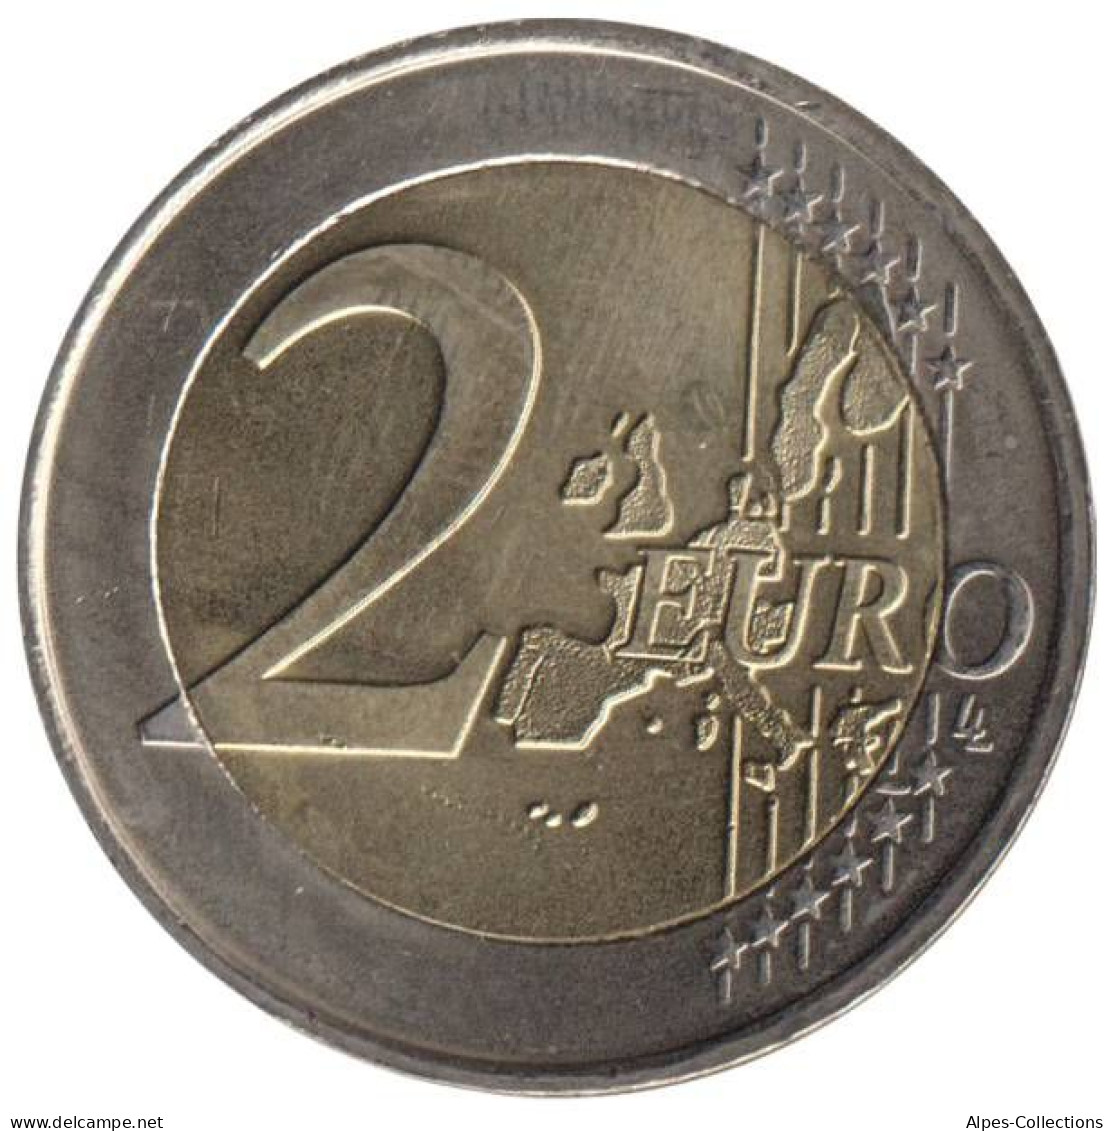 LU20004.4 - LUXEMBOURG - 2 Euros - 2004 - Luxembourg